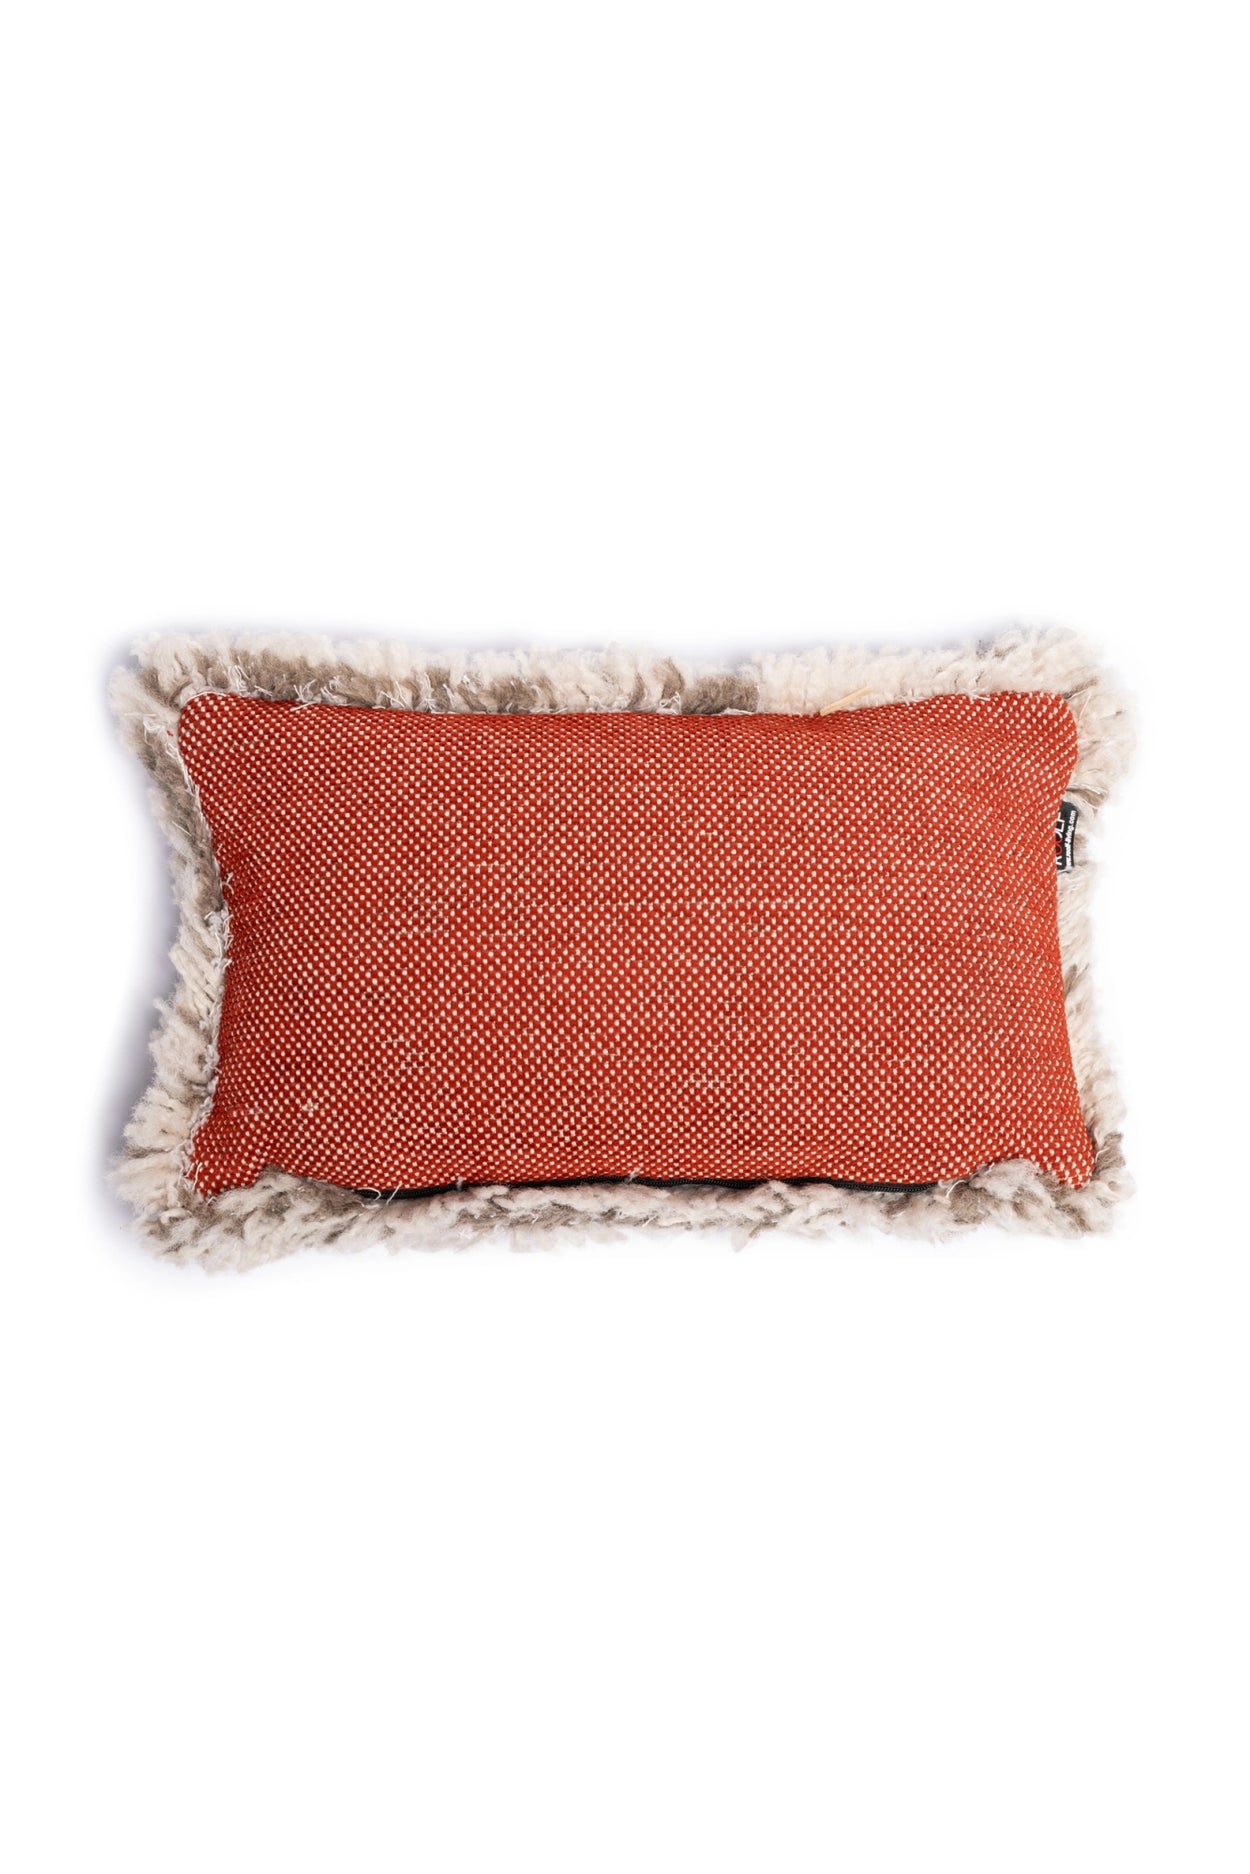 Silky Cushion 30 x 50 cm